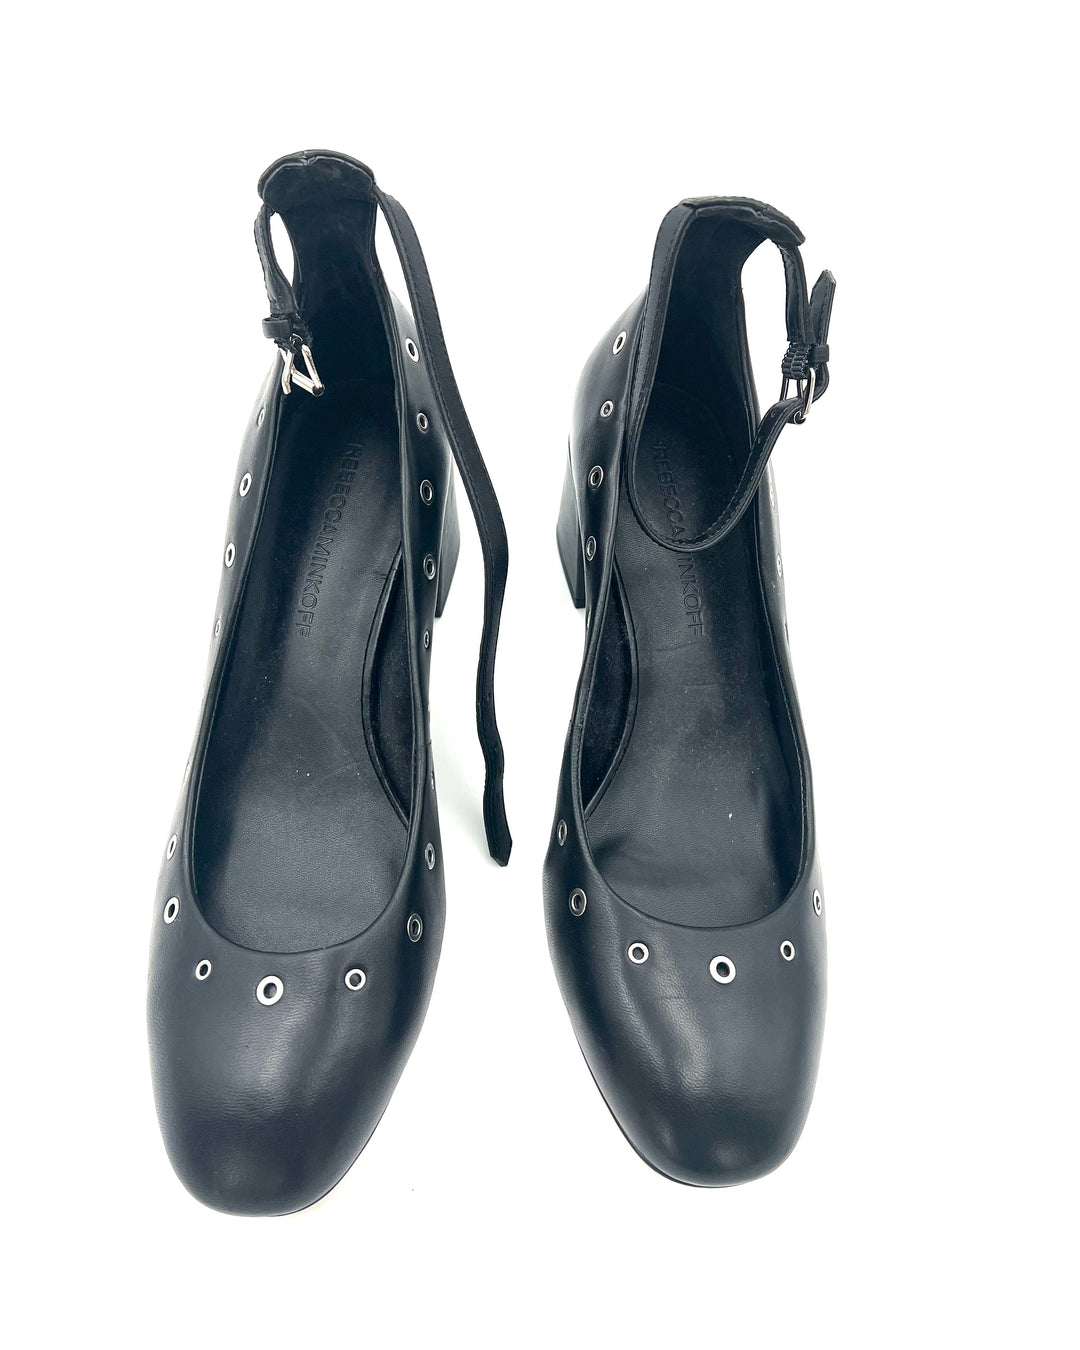 Black Grommet Strap Heels - Size 7